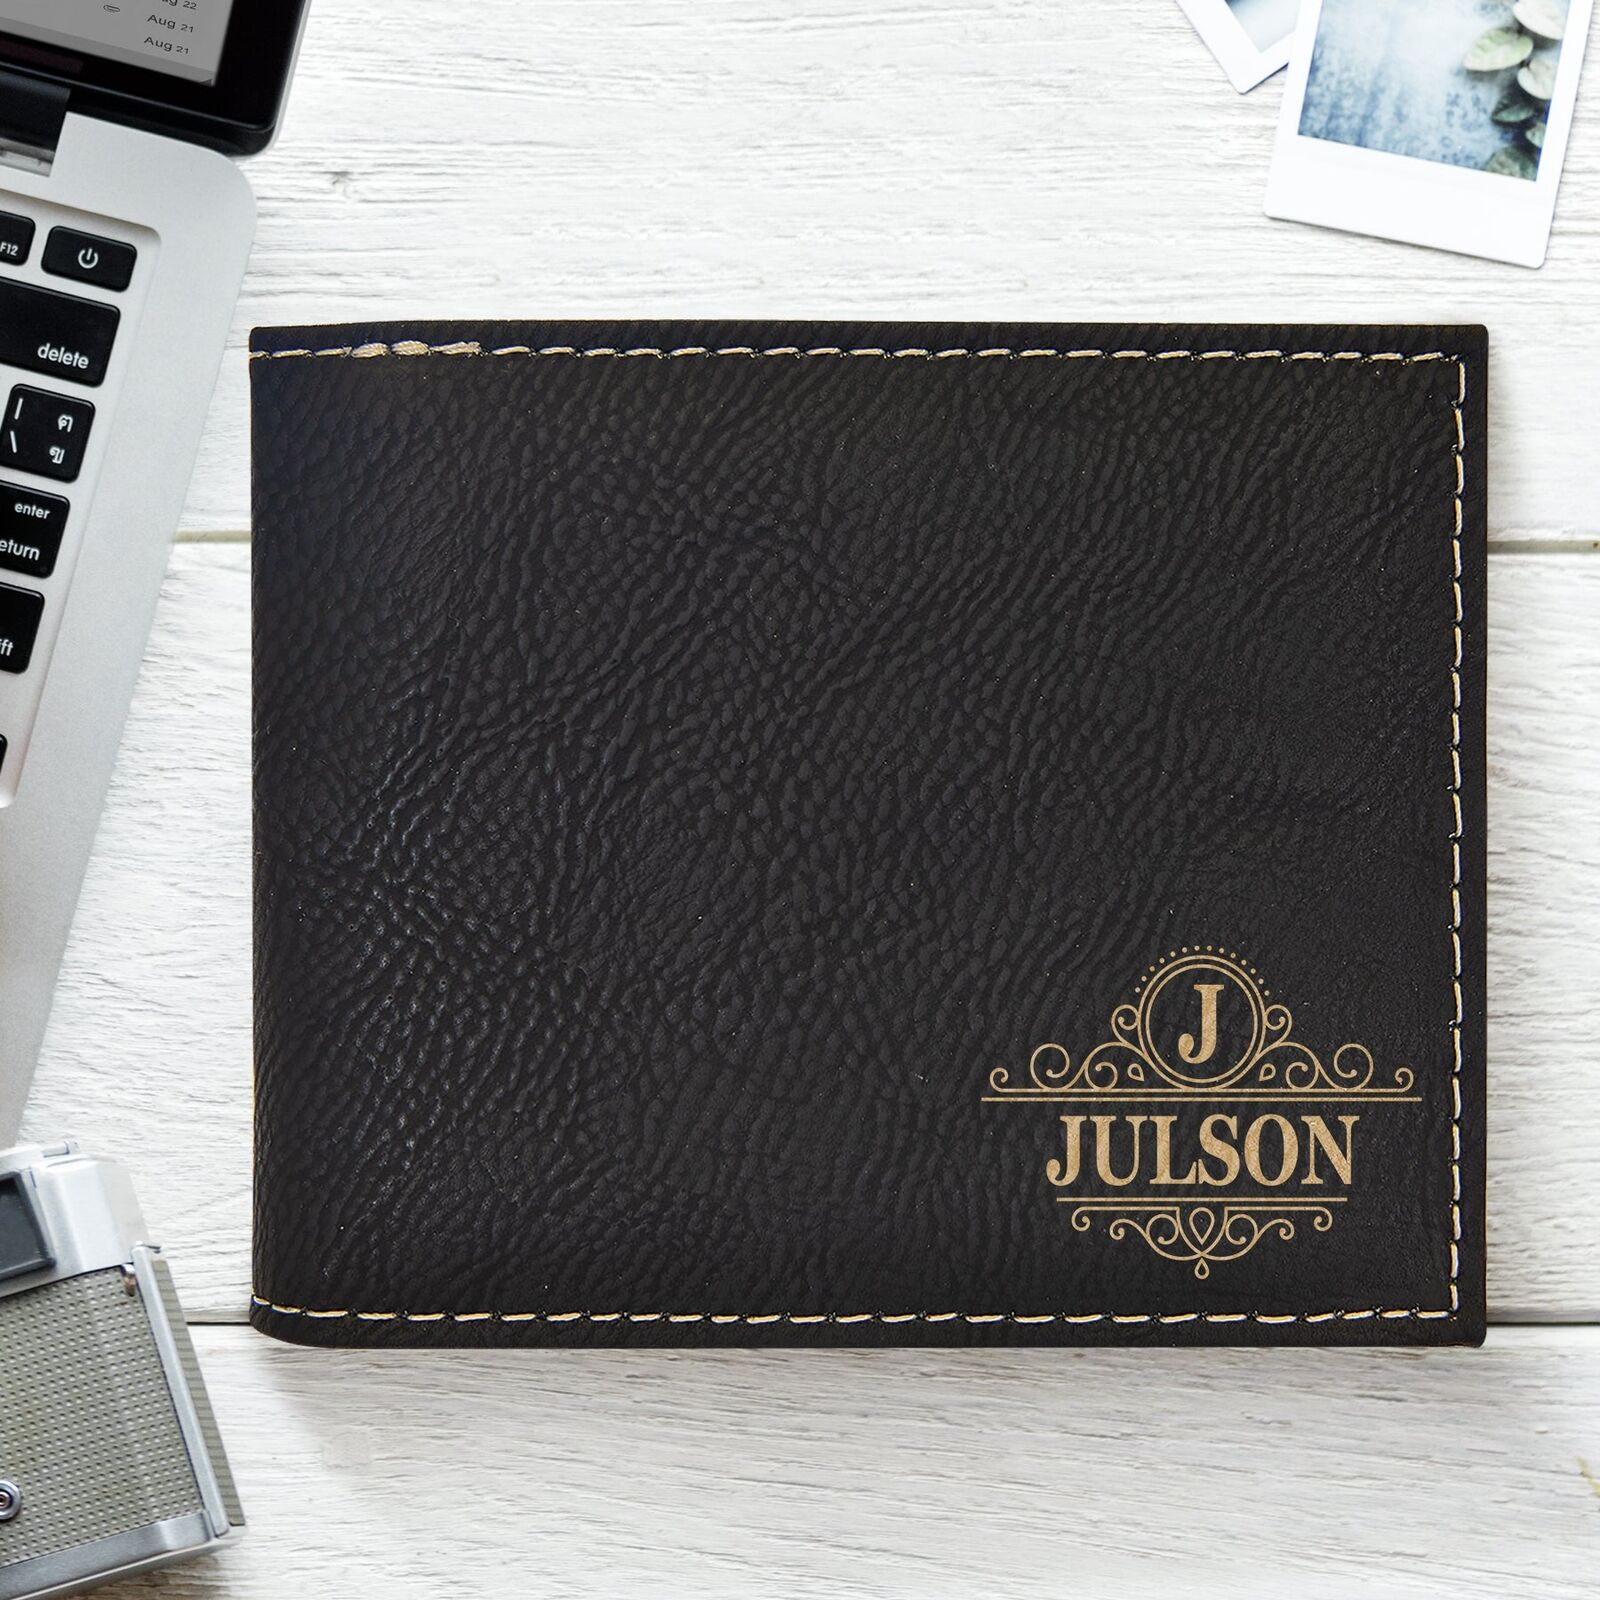 Customized 'Julson' Black & Gold Bi-Fold Wallet For Men, RFID Protected Wallet F